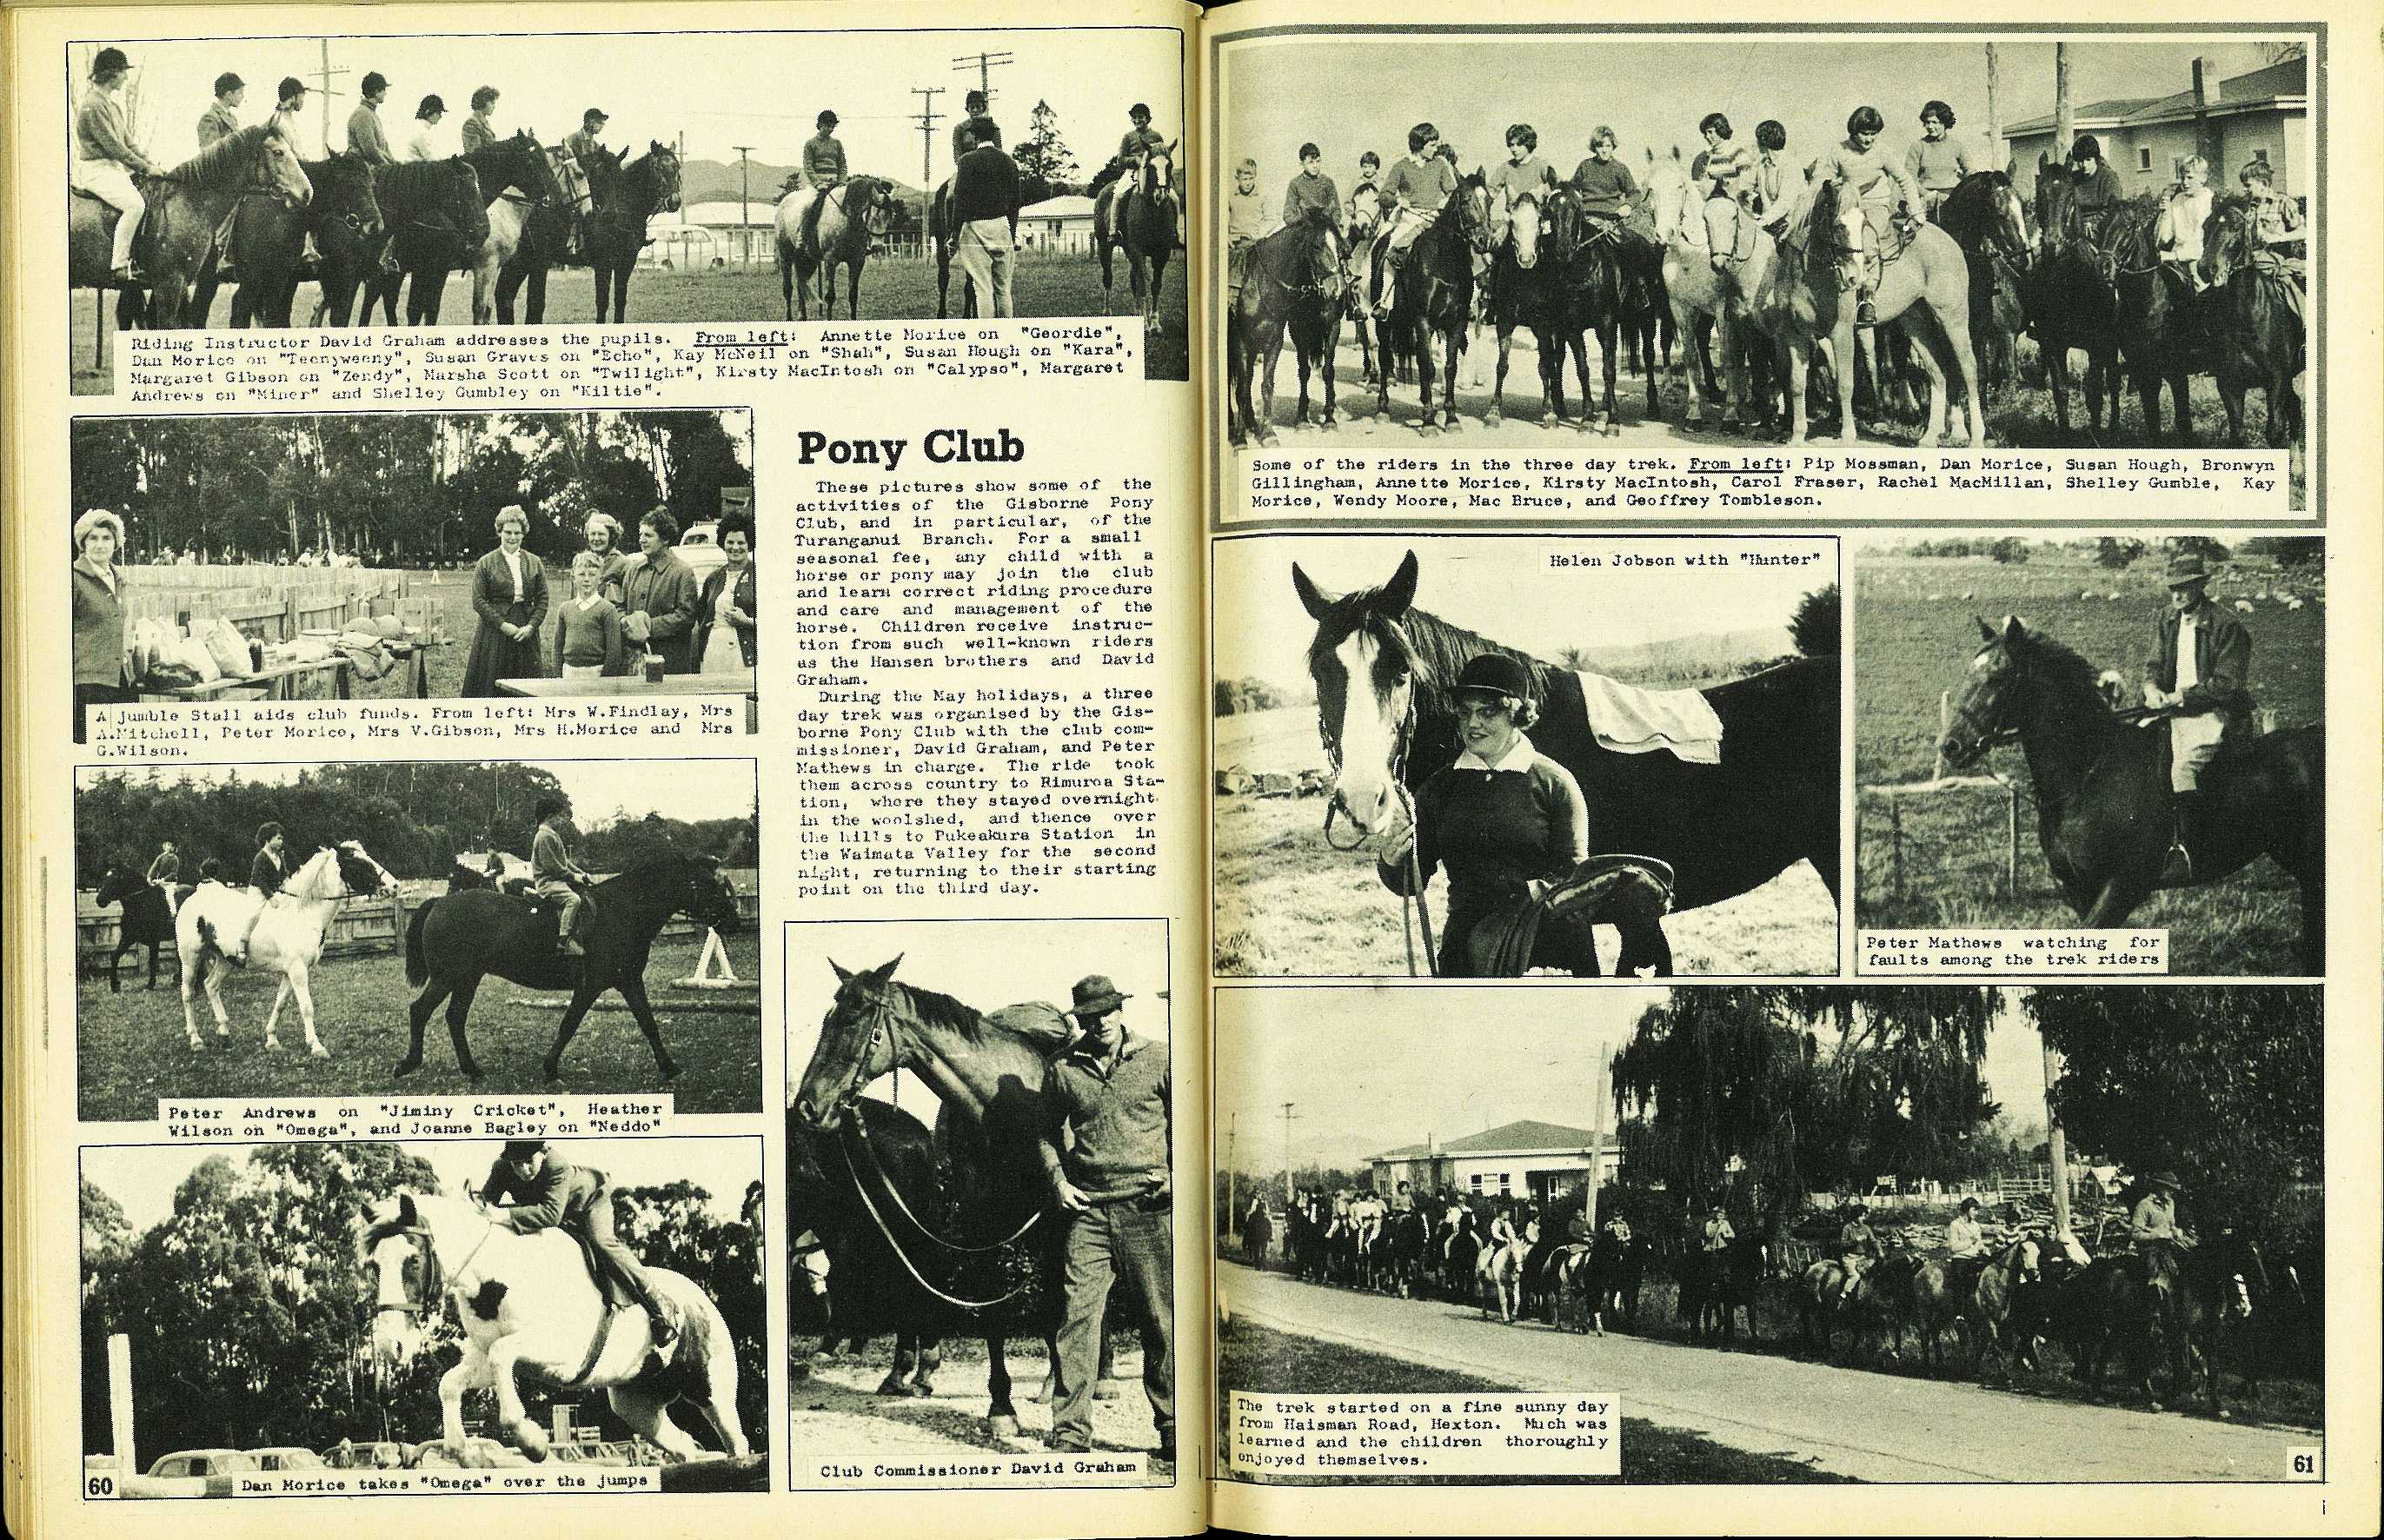 Pony Club - Gisborne Photo News - No 108 : June 13, 1963